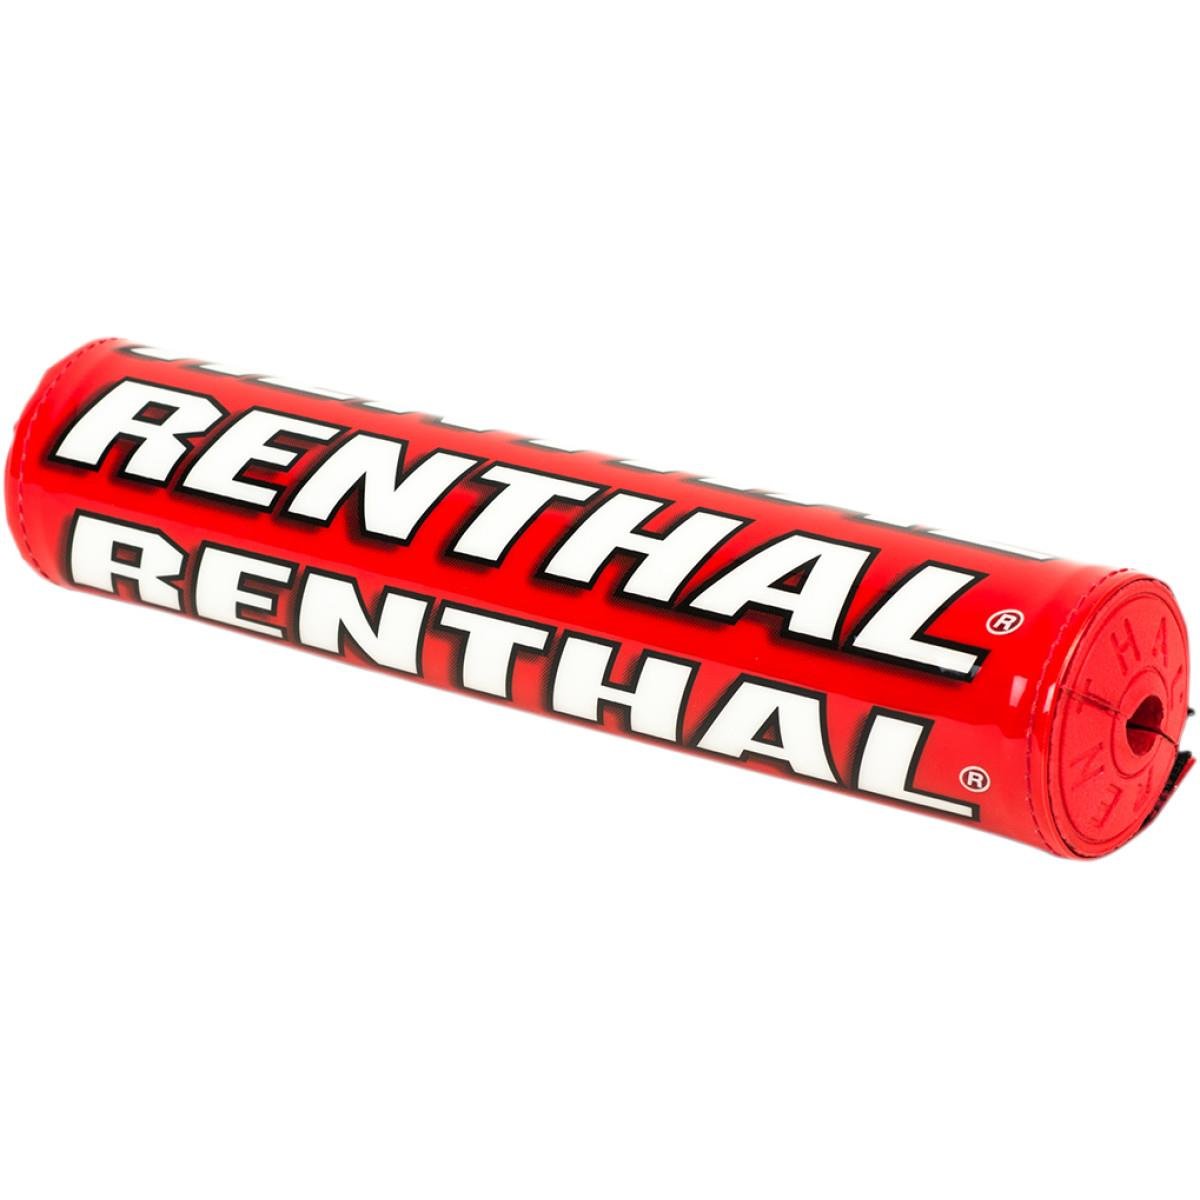 Renthal Bar Pad SX Red - Limited Editon